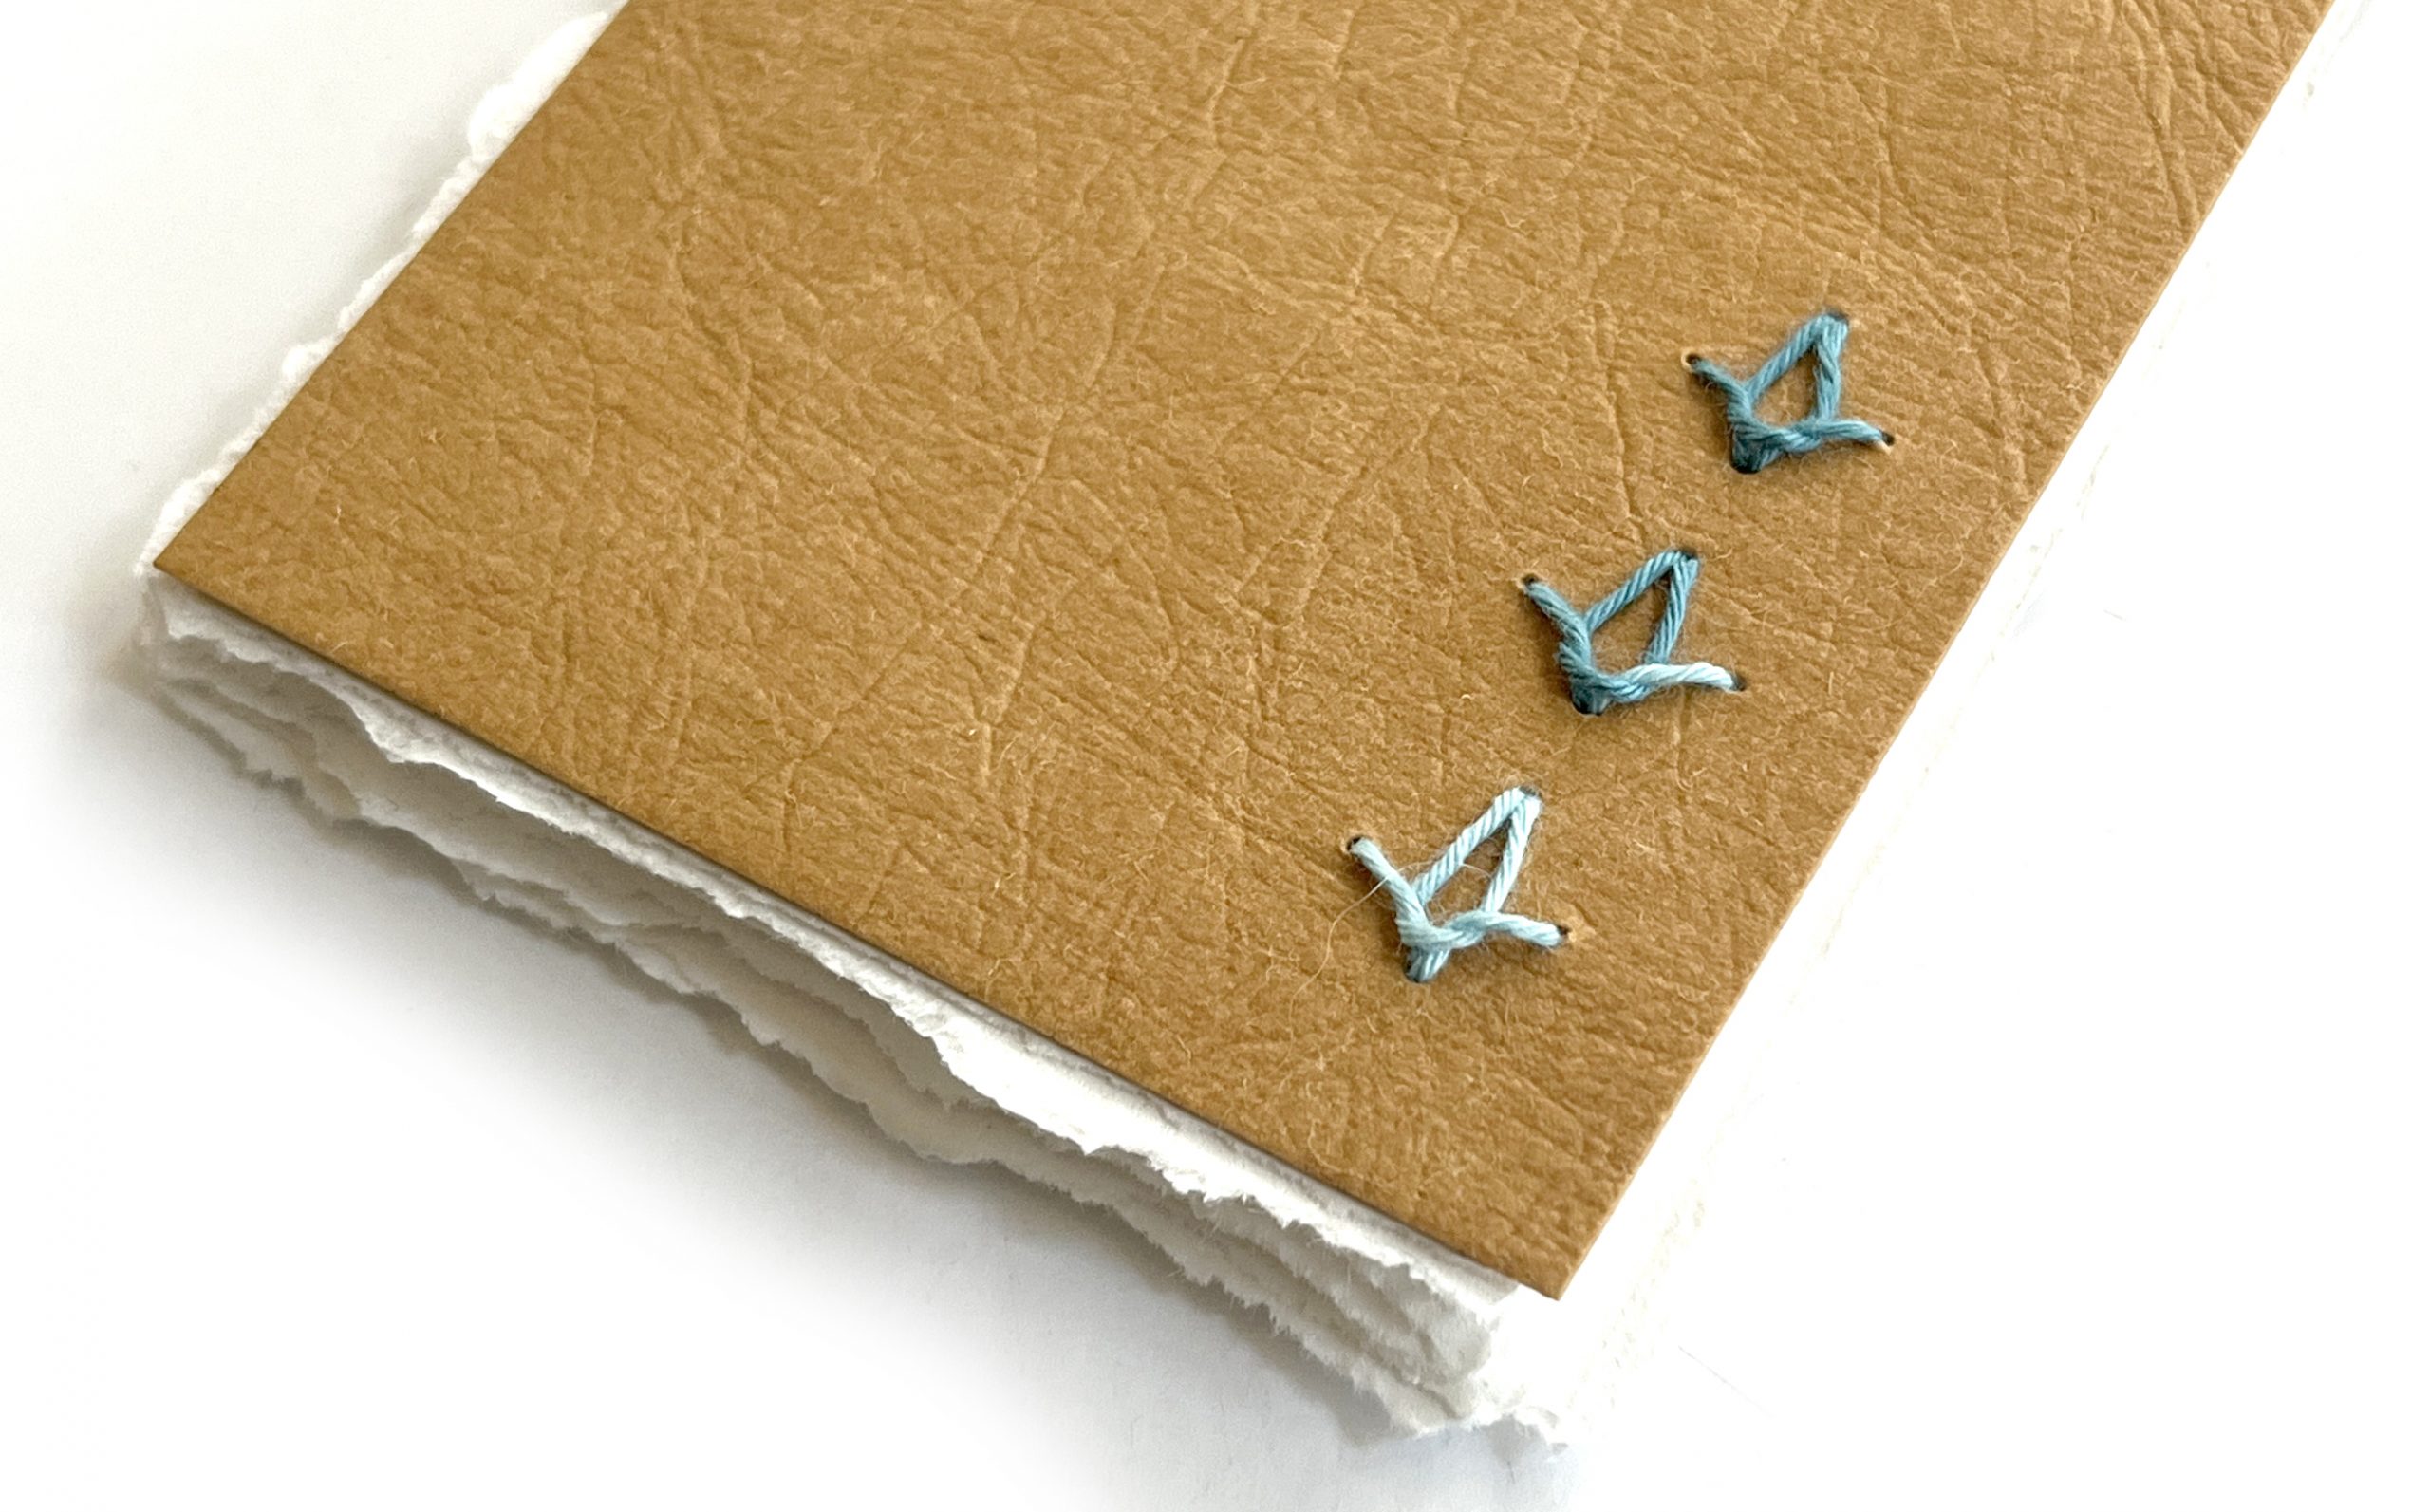 Arteza Bone Folder Folding Creasing Paper Tool for DIY Crafts - 4 Piece 